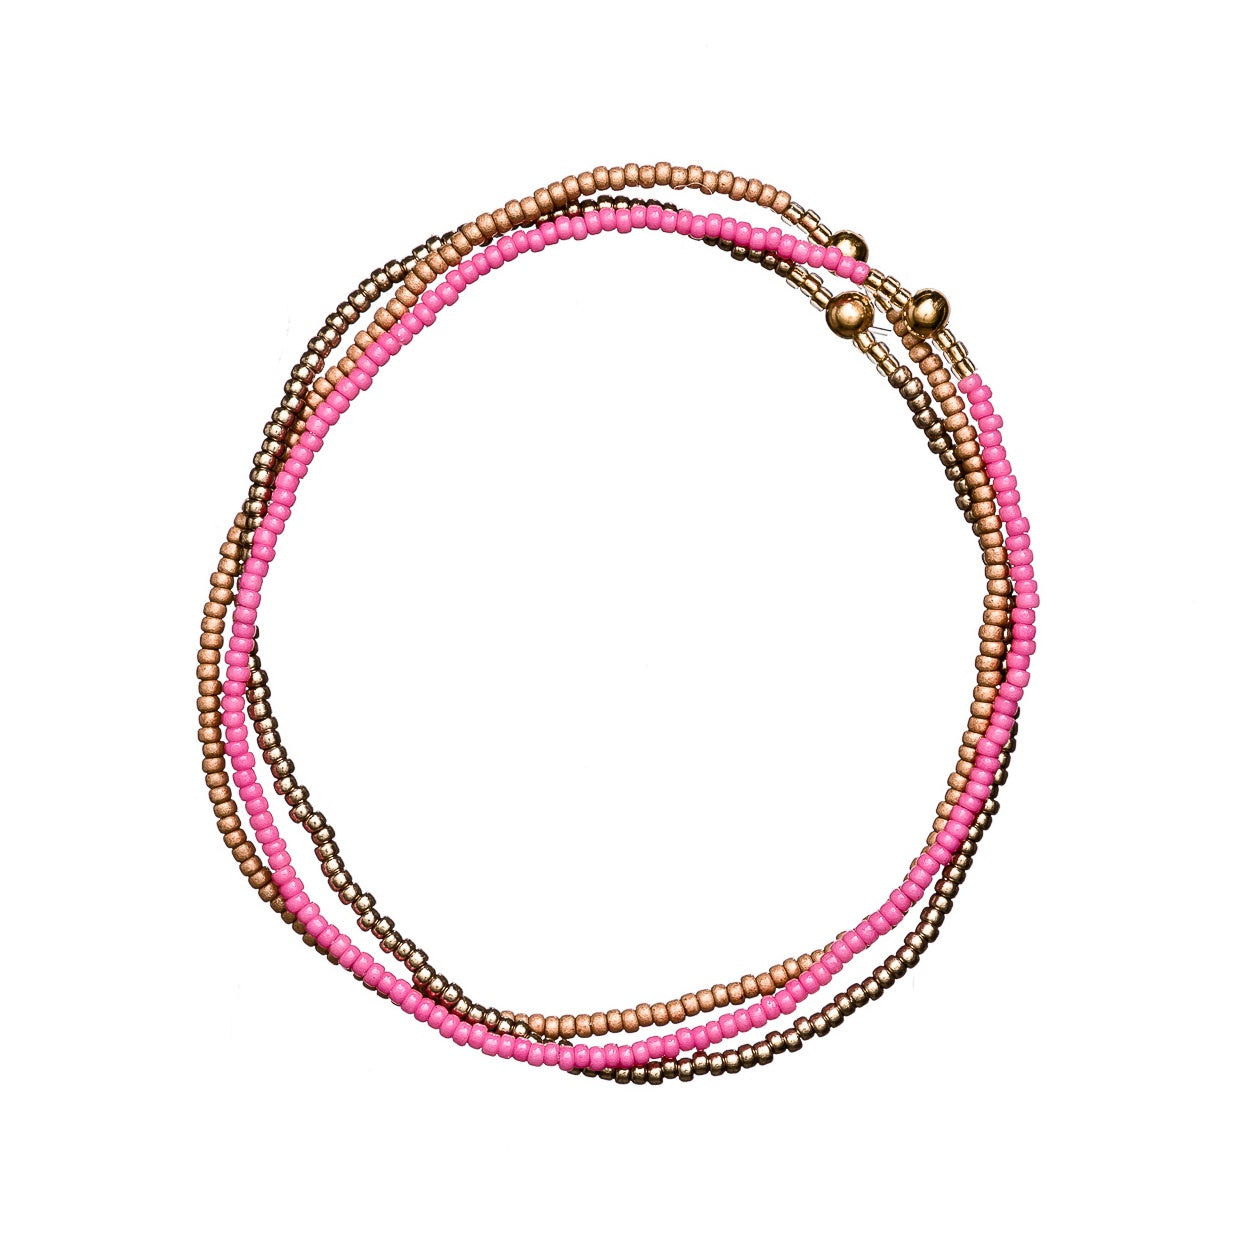 Set of 3 beaded bracelets pink, gold & bronze